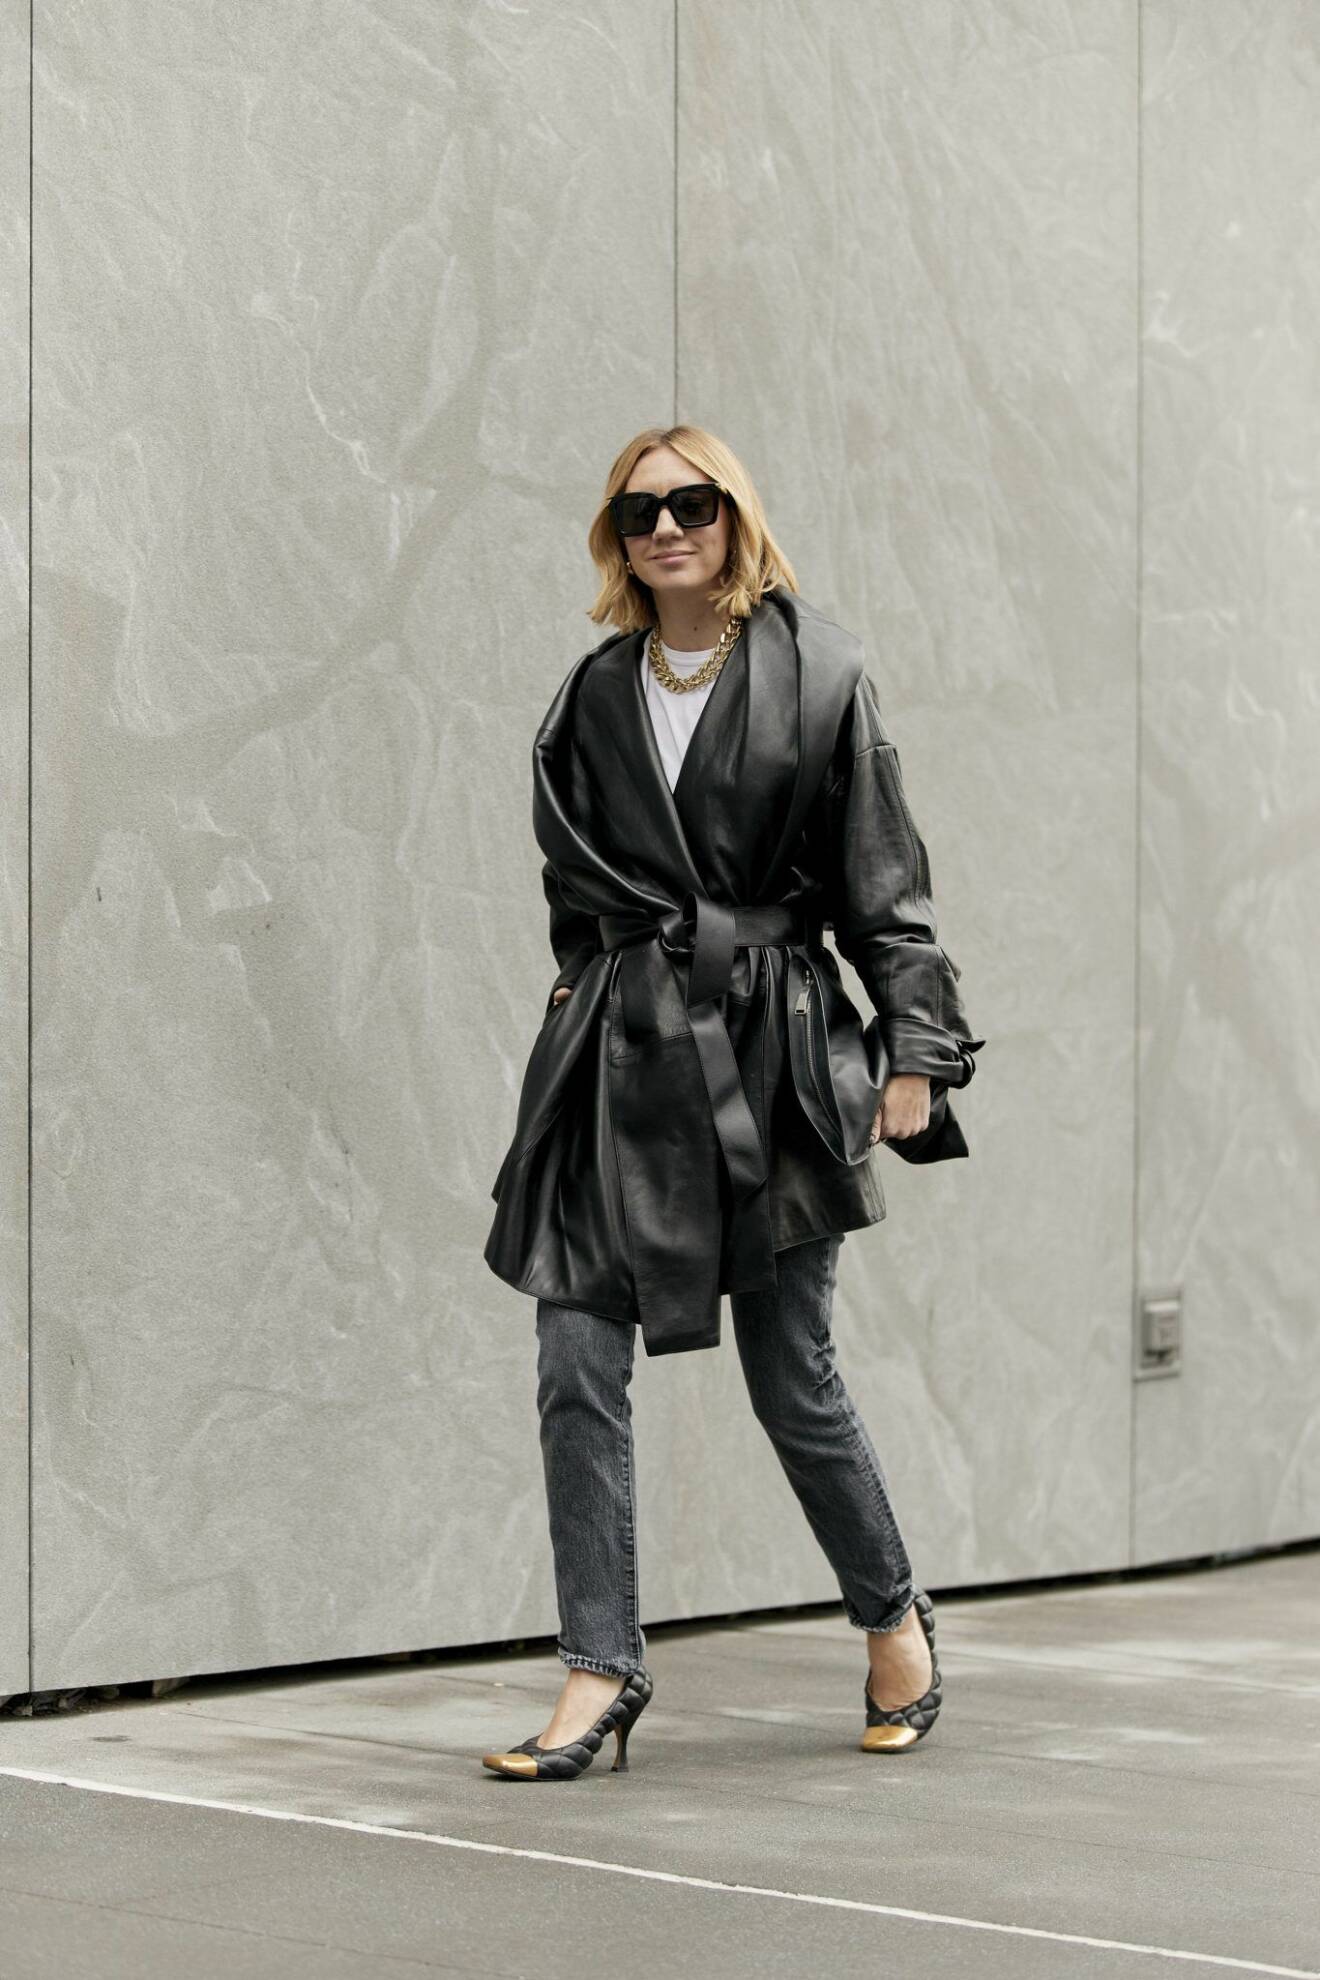 Läder kappa, streetstyle-look från New York Fashion Week 2020.